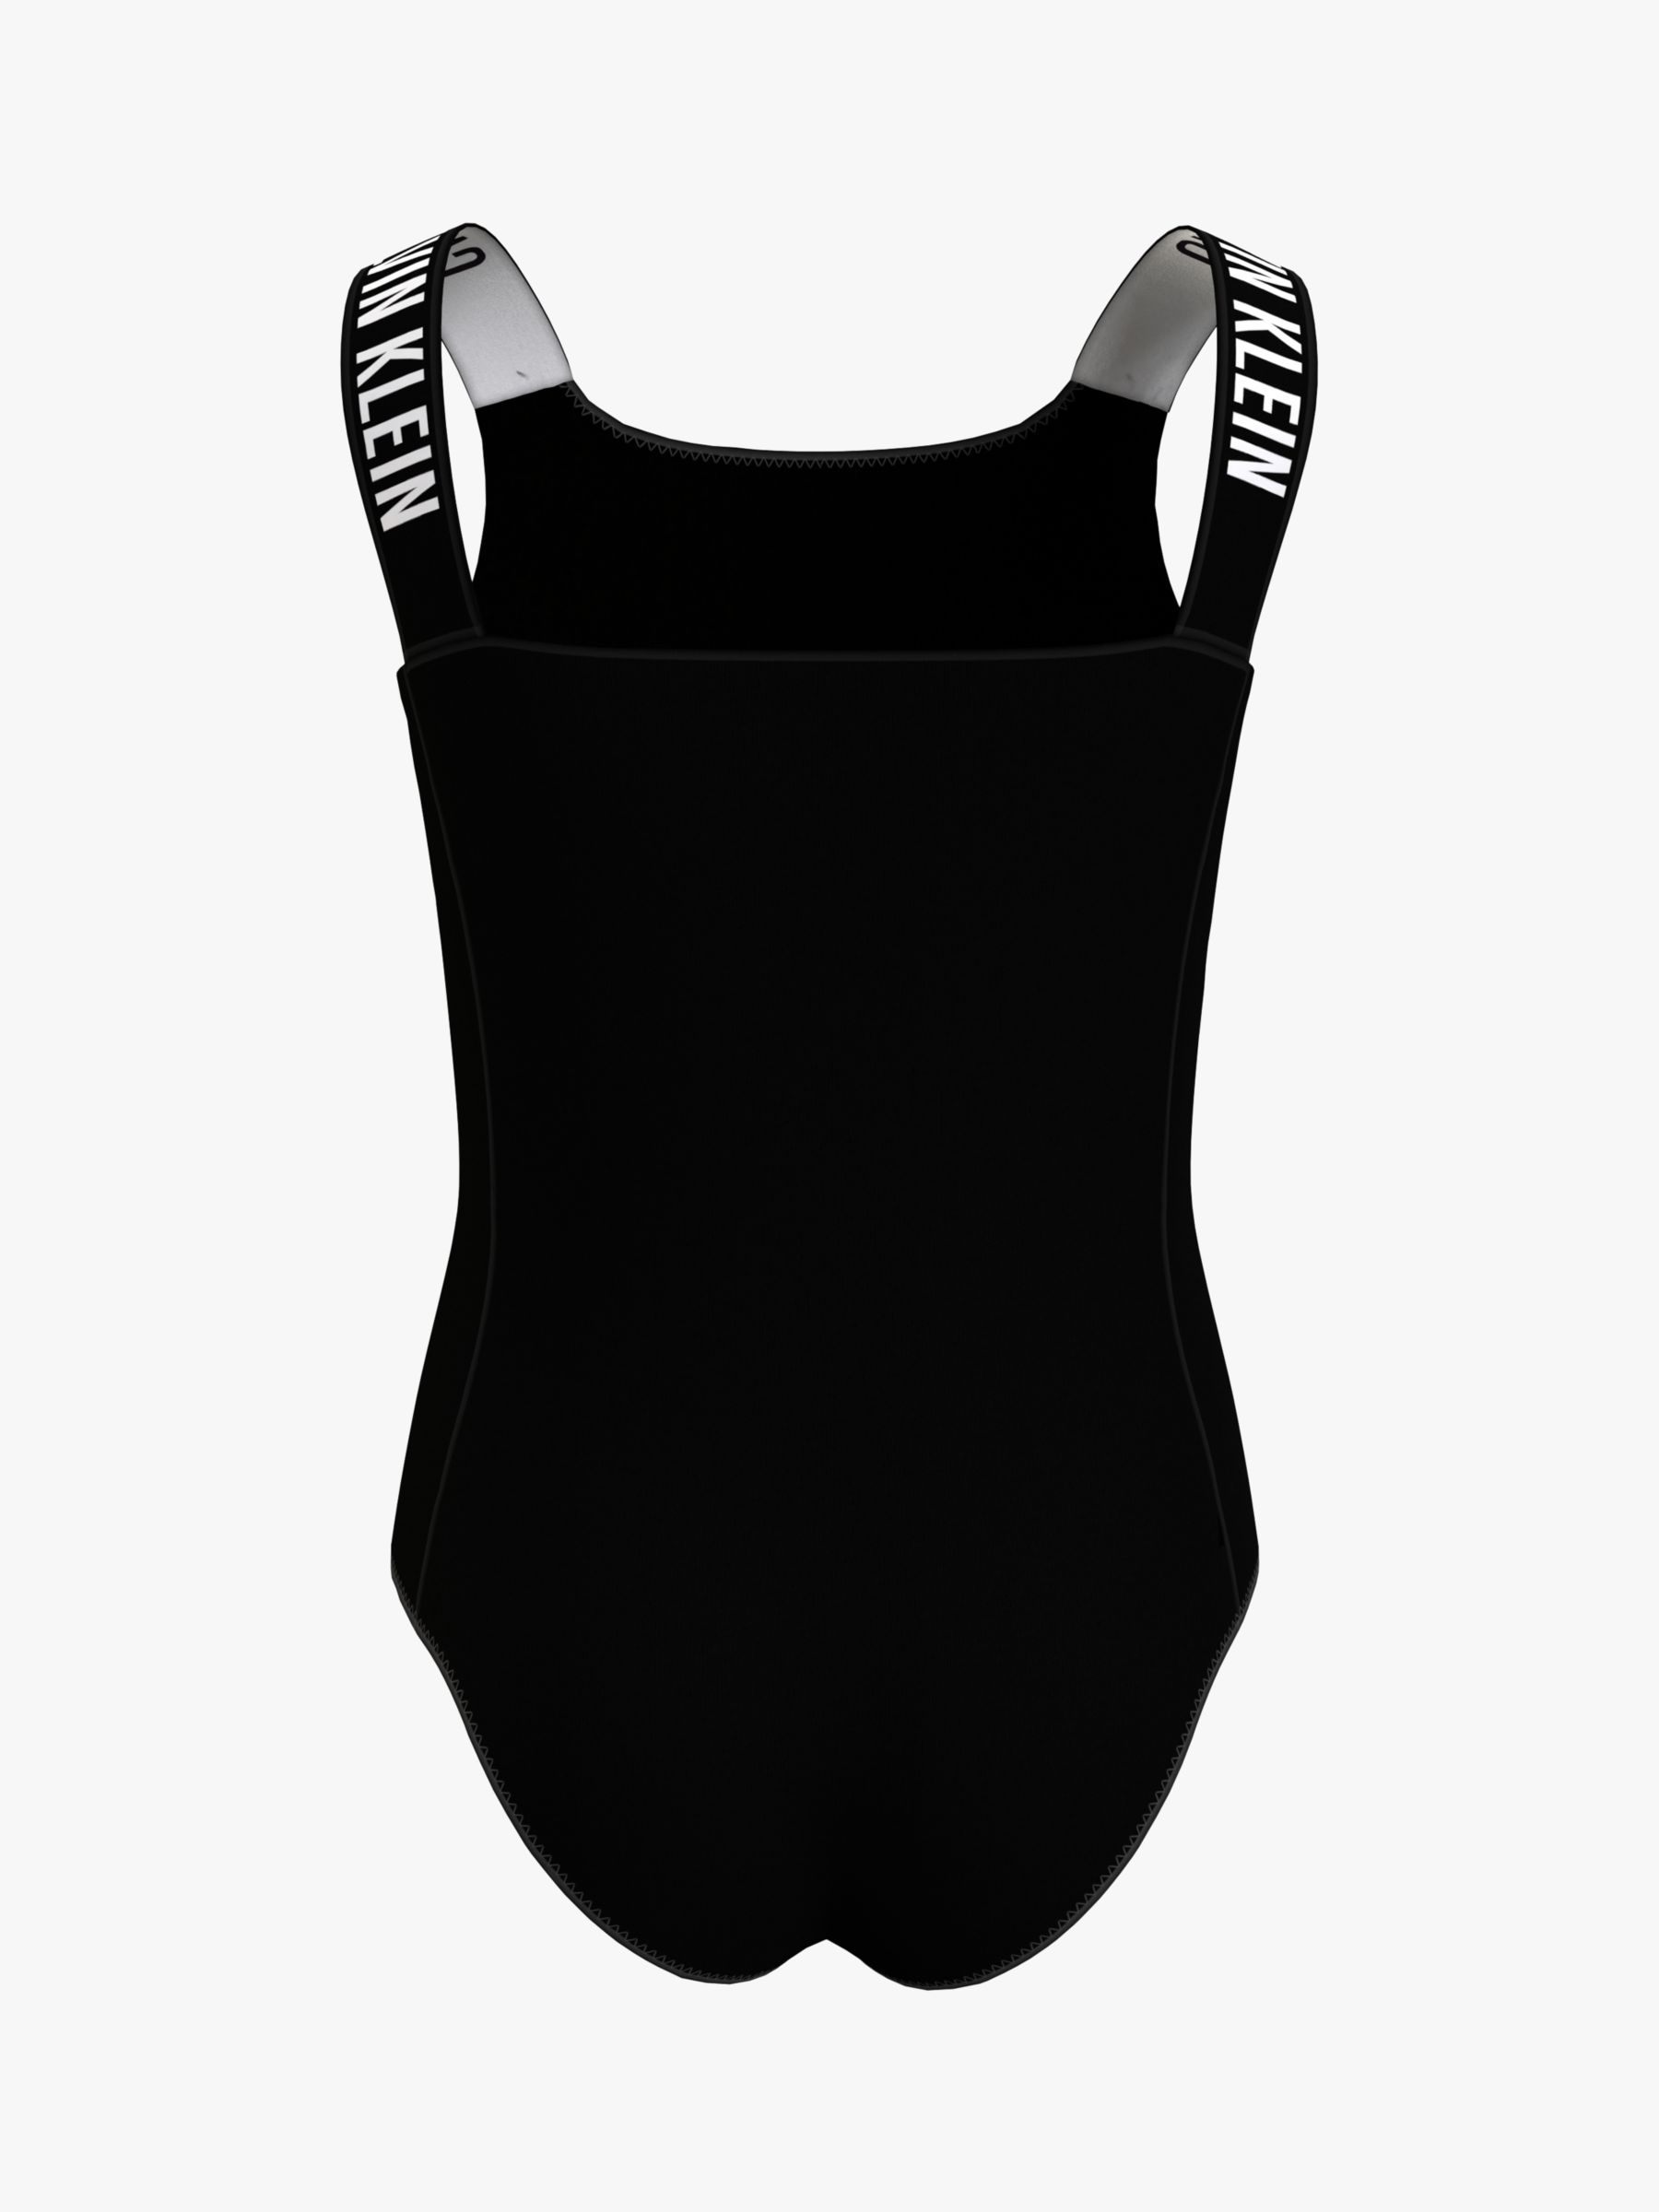 Calvin Klein Kids' Intense Power Swimsuit, Black, 8-10 years